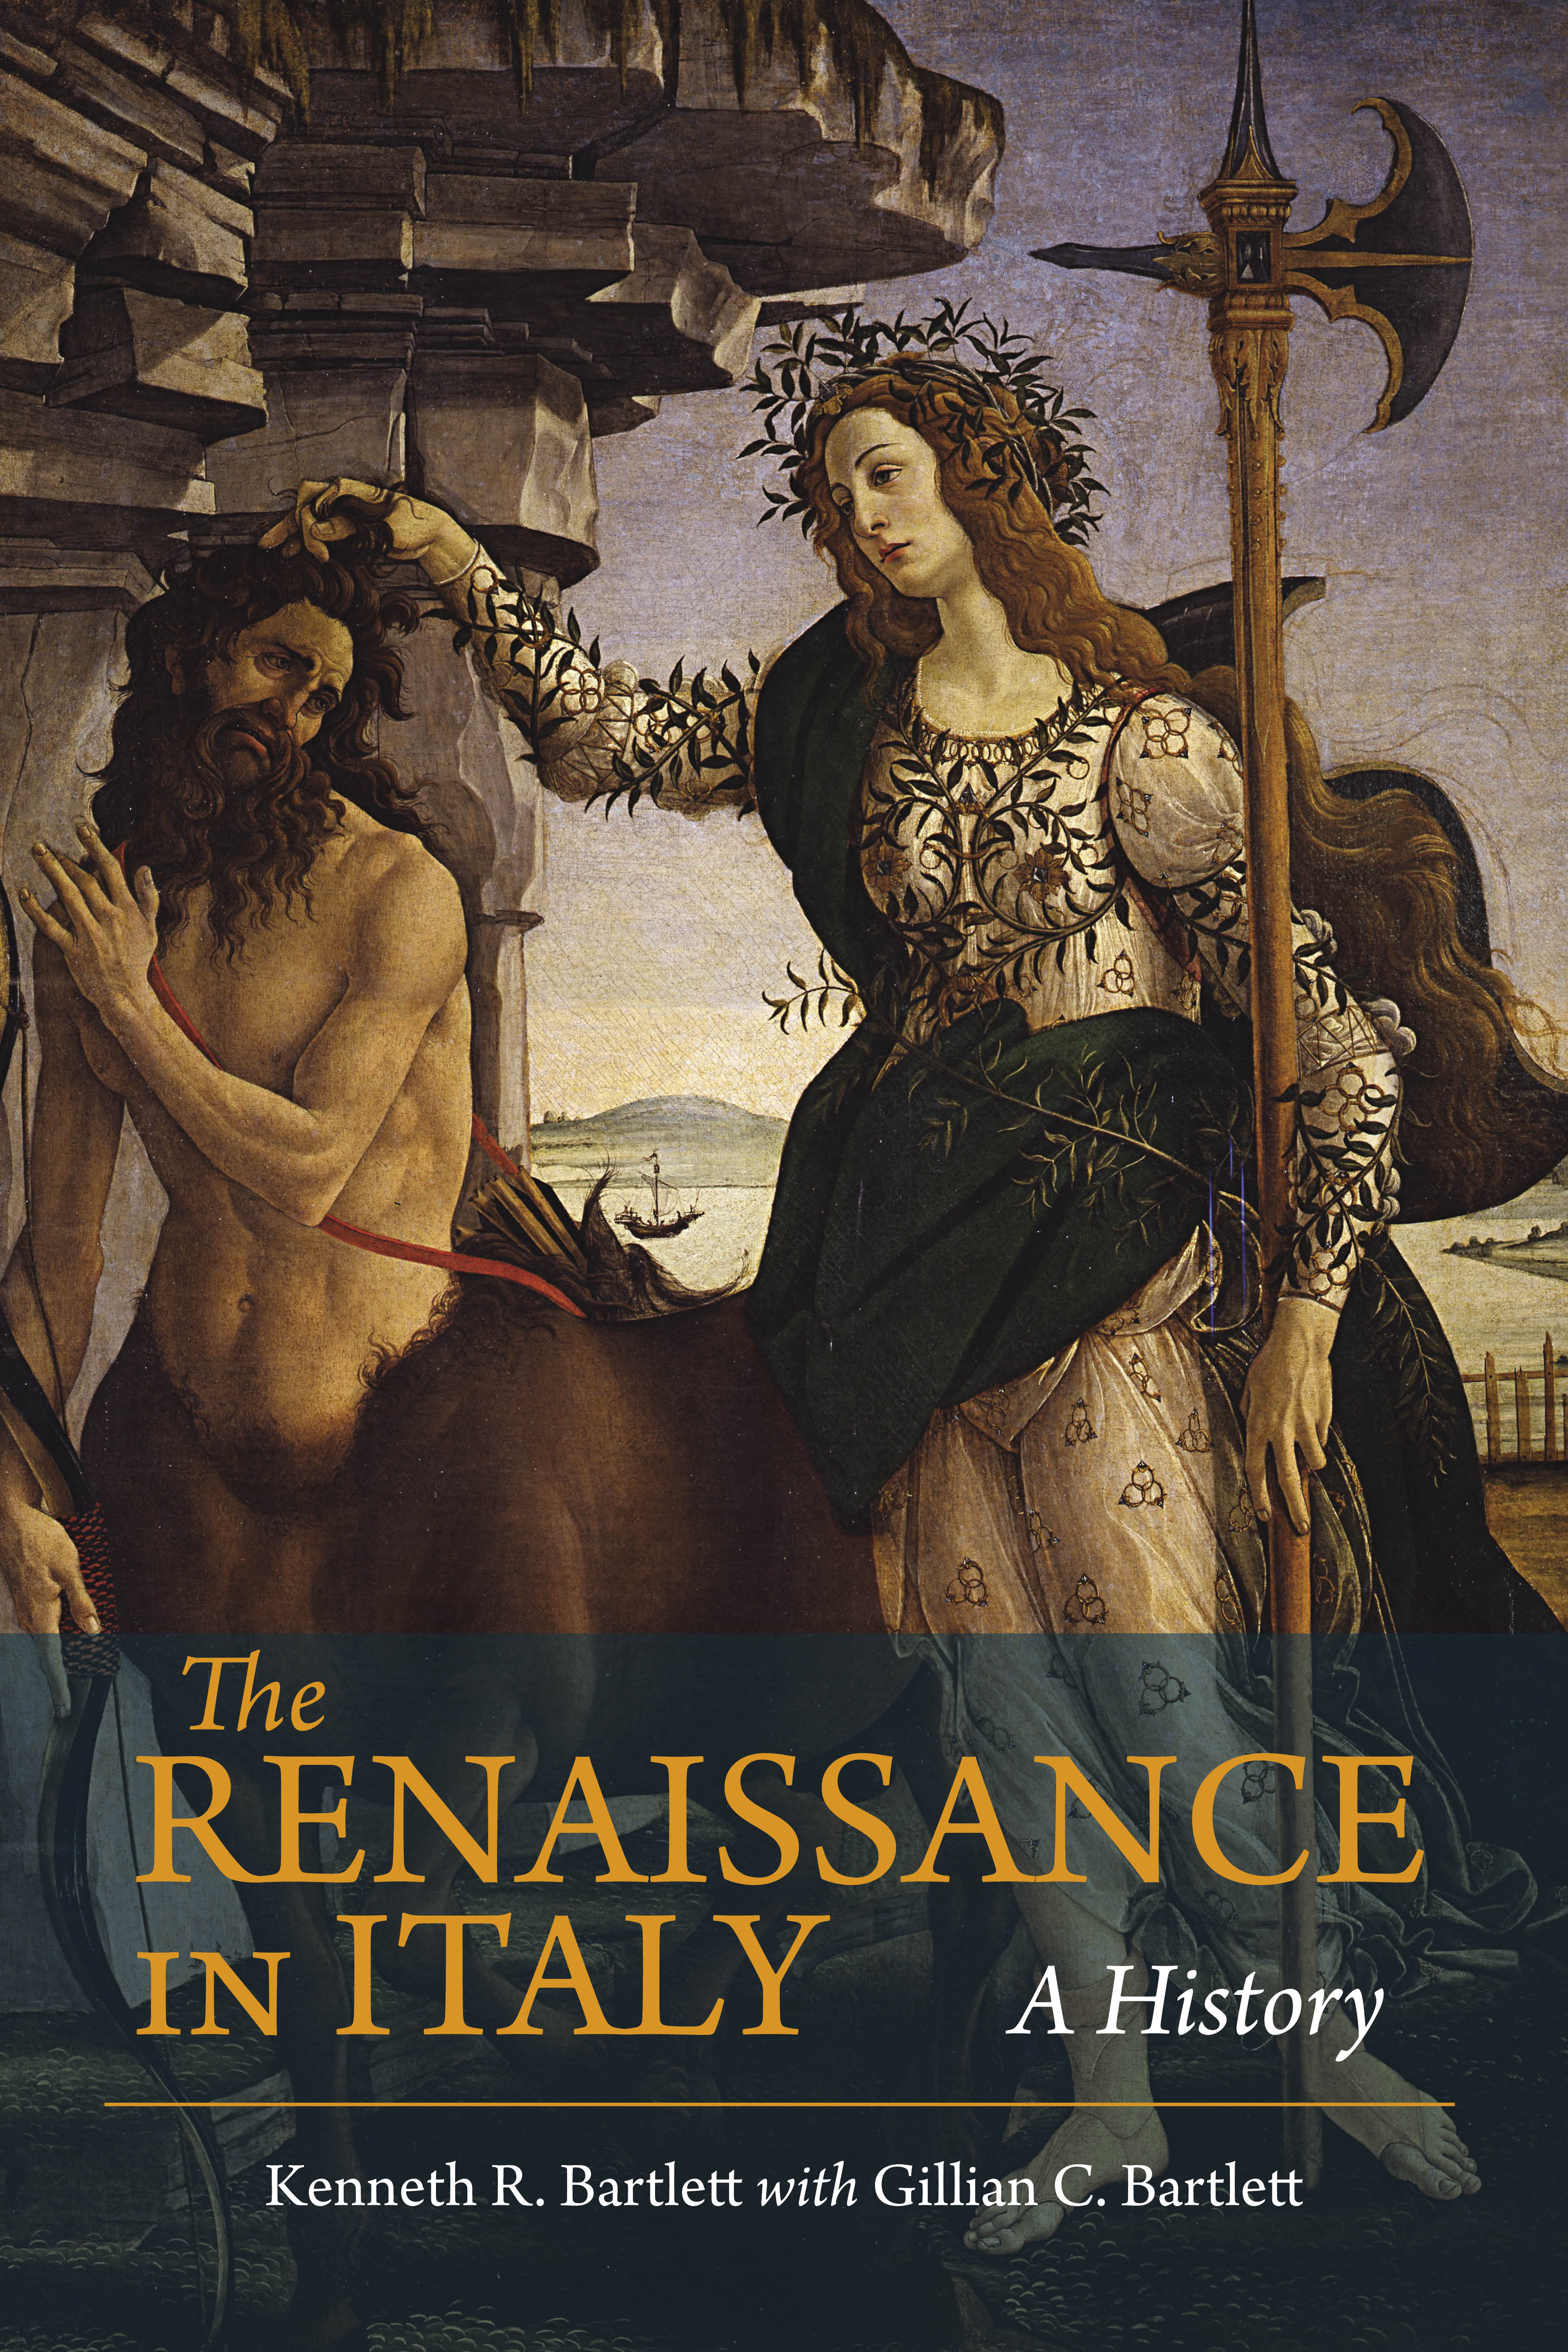 The Renaissance in Italy: A History Kenneth R. Bartlett with Gillian C. Bartlett